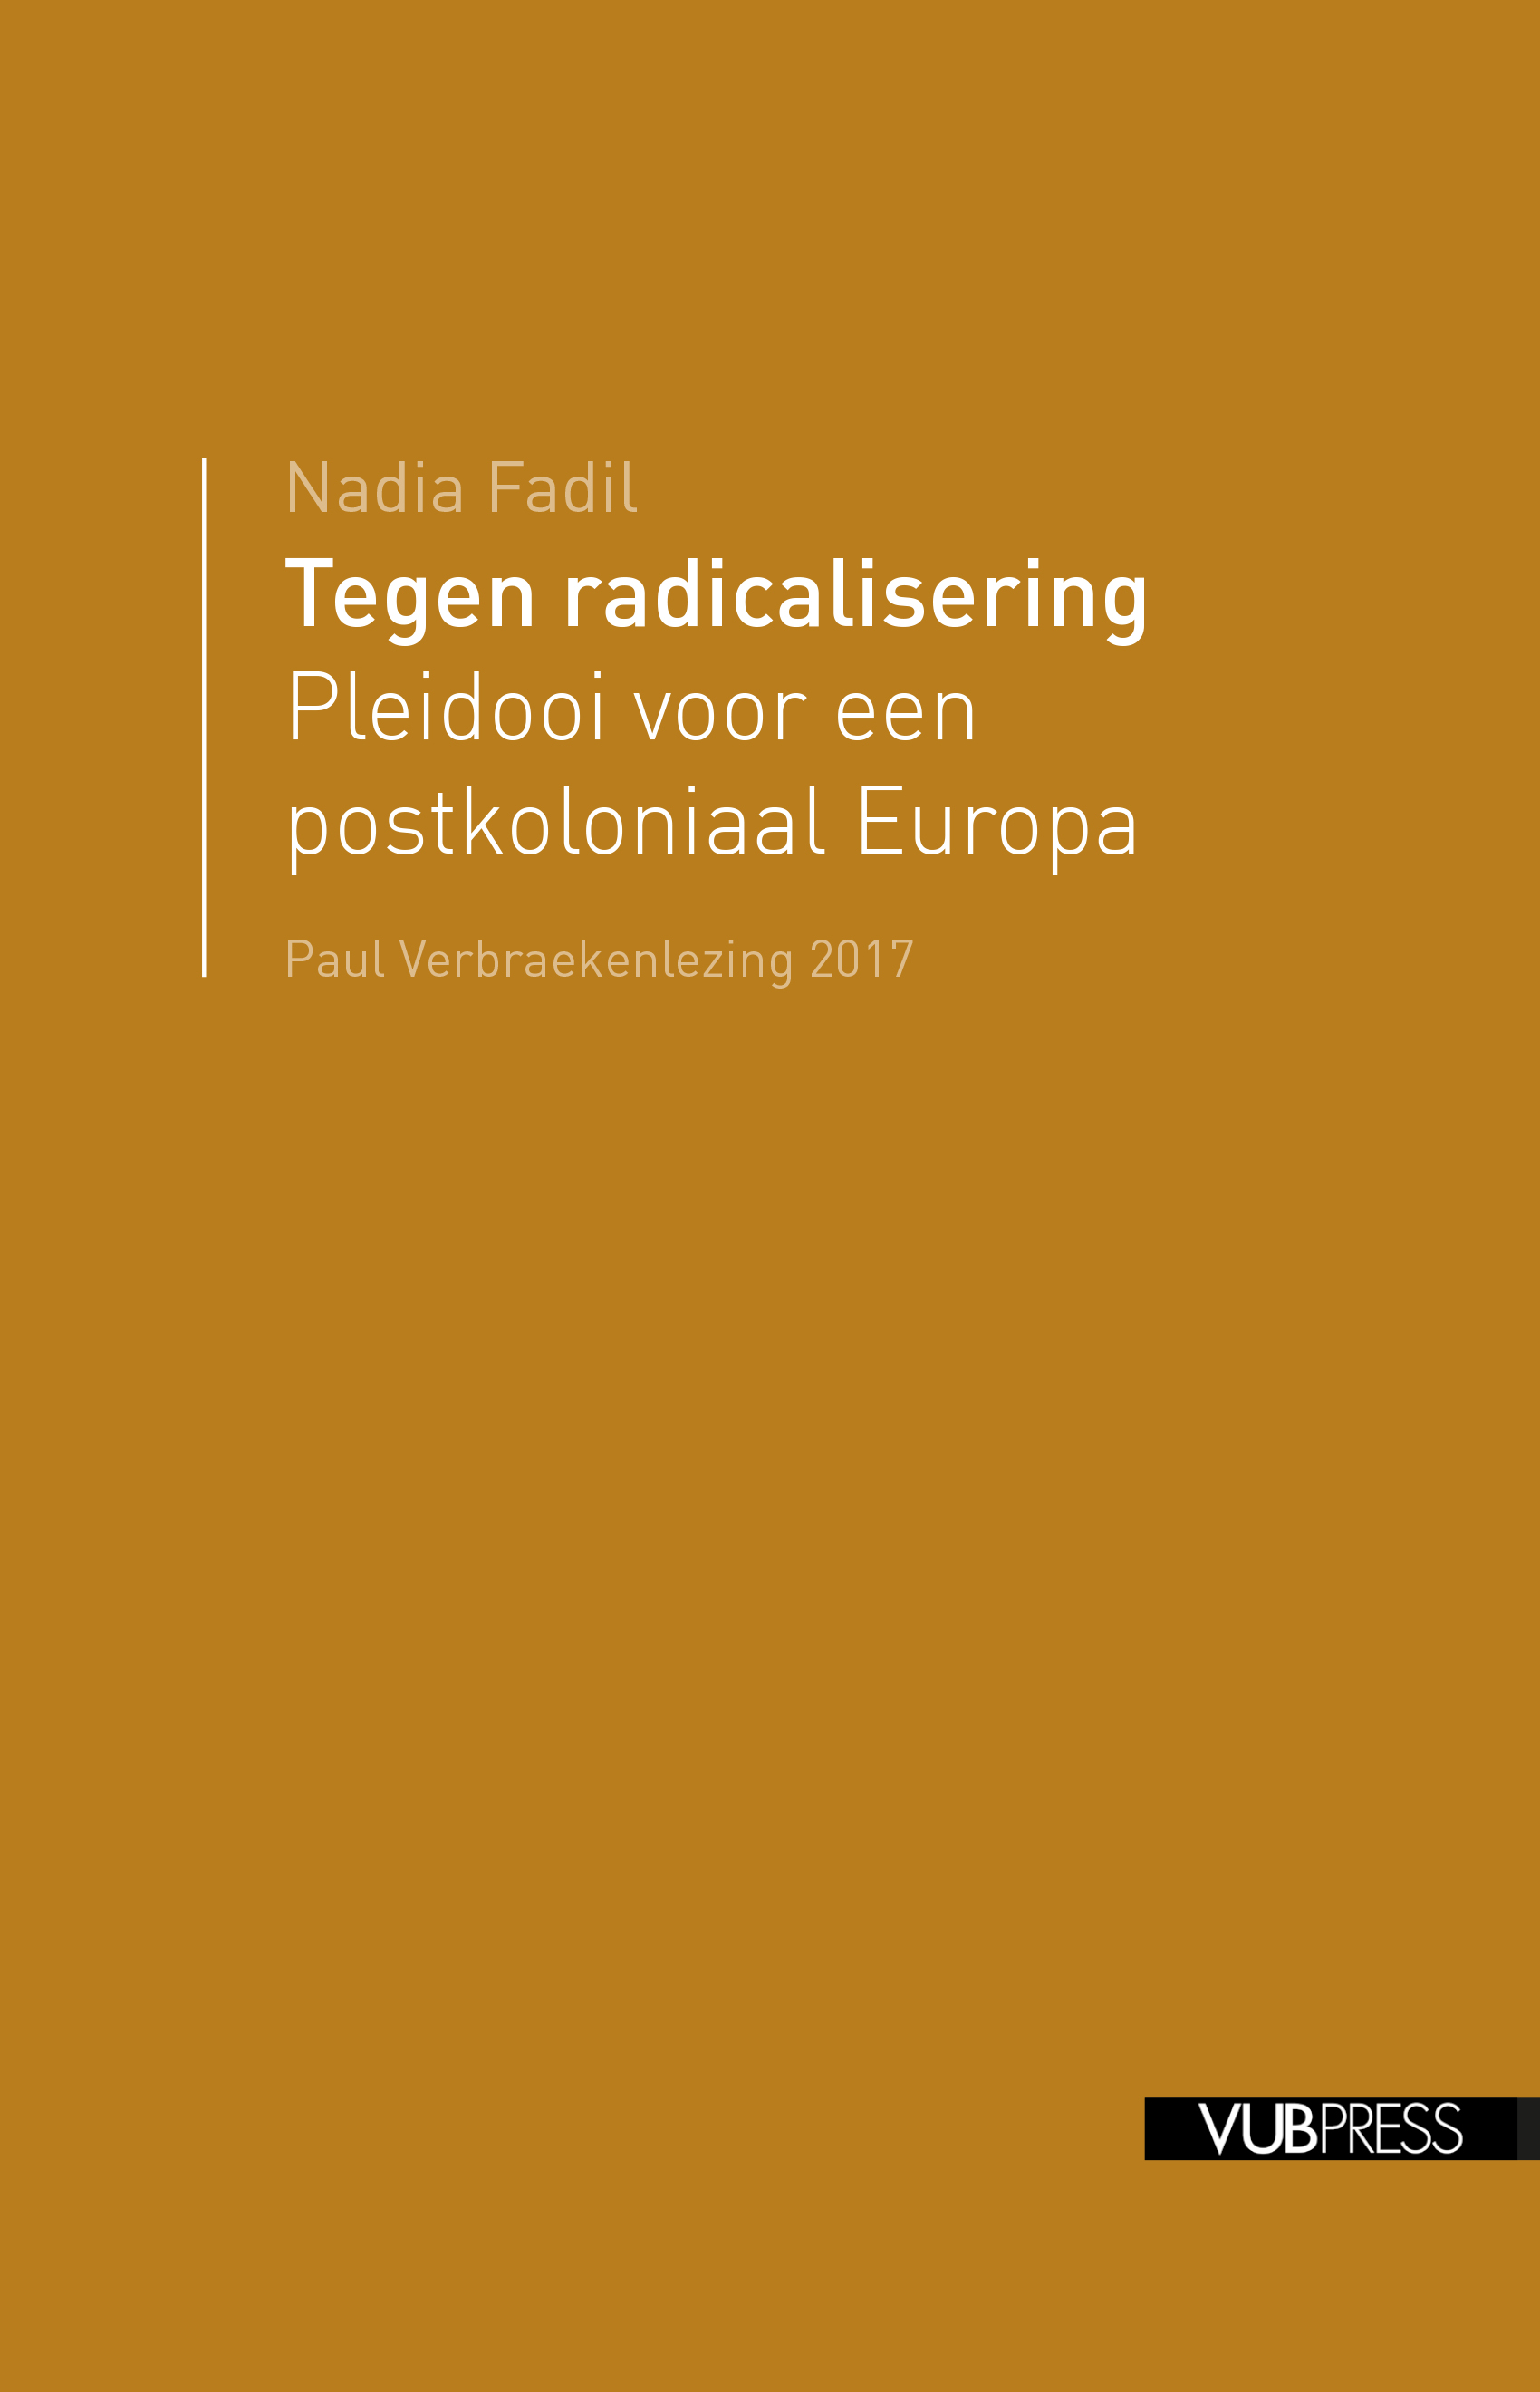 TEGEN RADICALISERING (Paul Verbraekenlezing 2017)